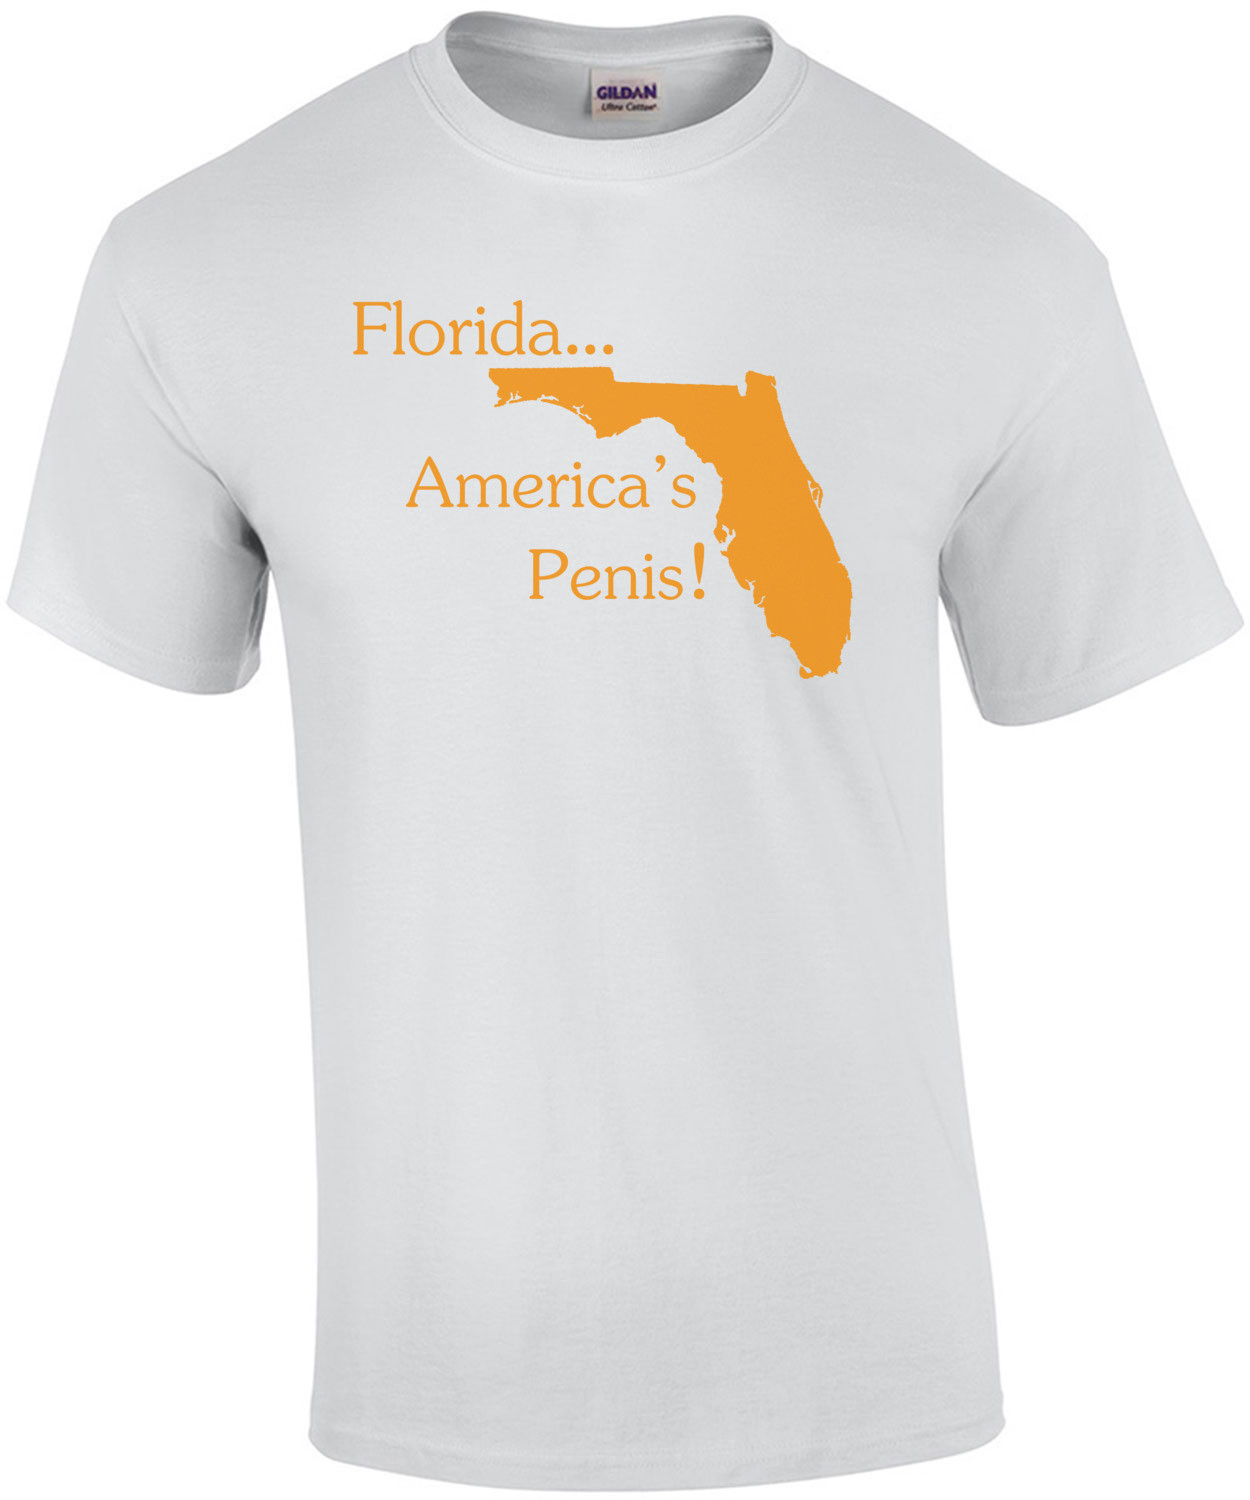 Florida... America's Penis!  Funny